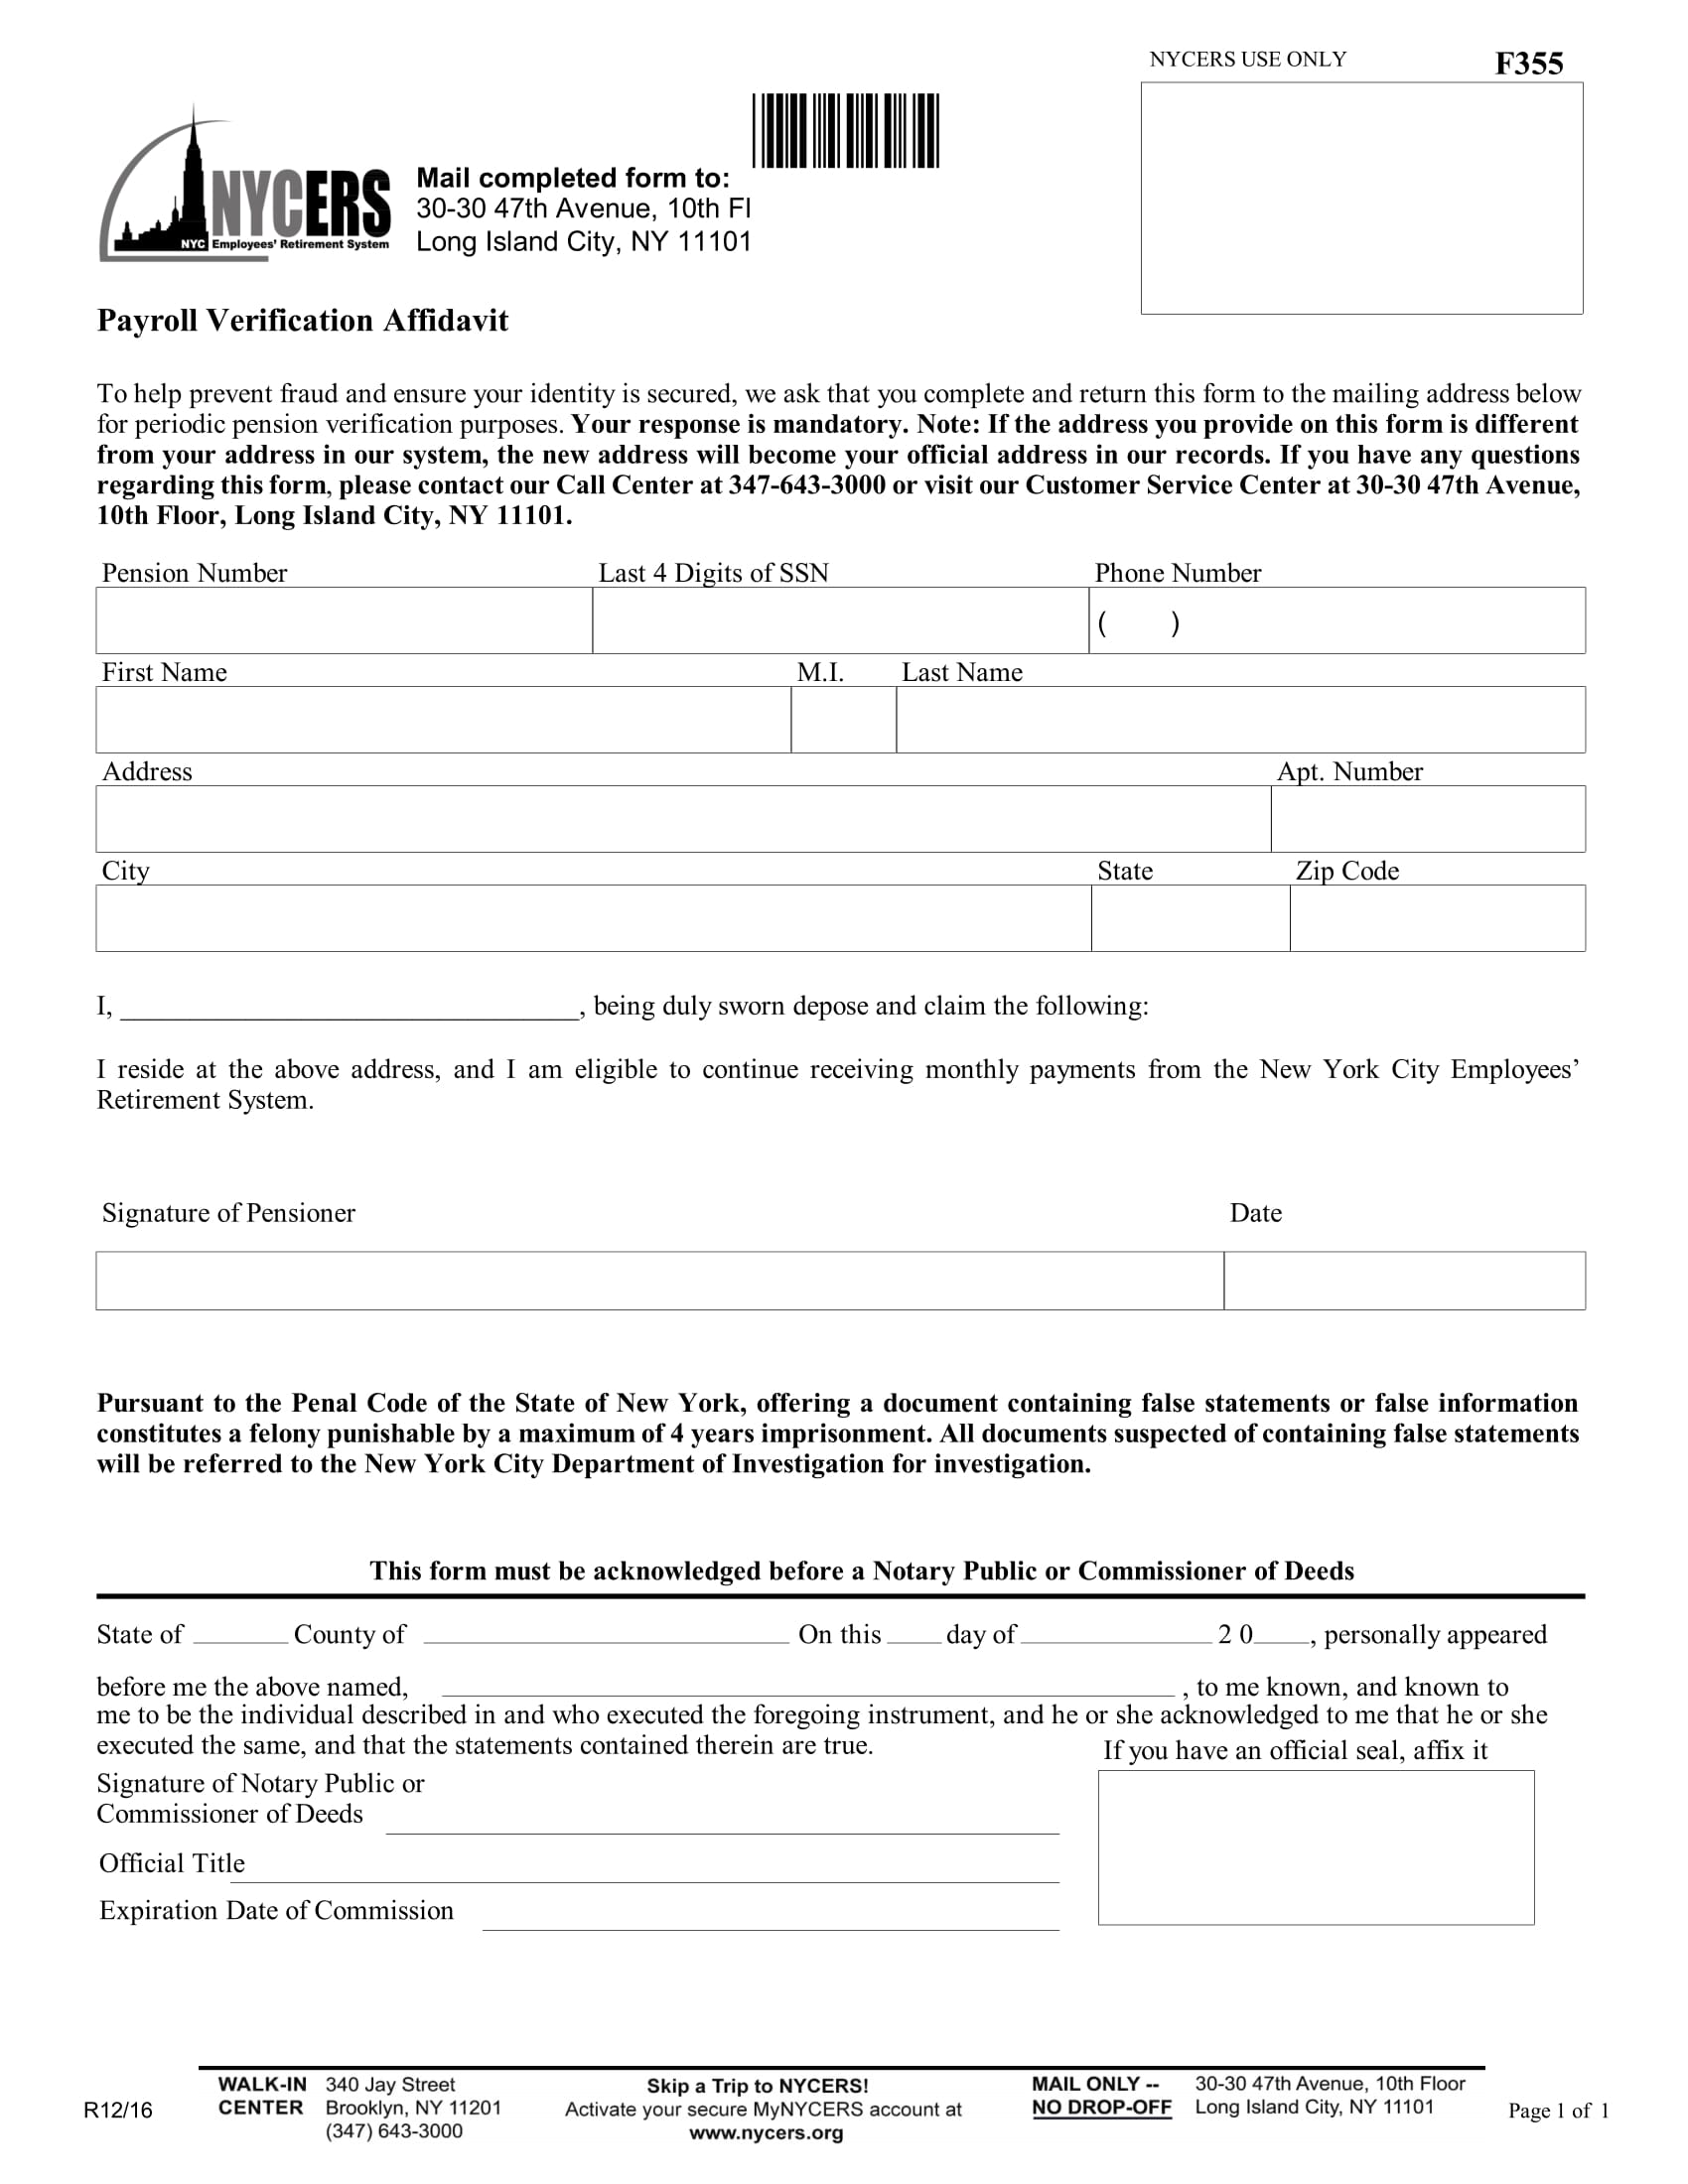 payroll verification affidavit form 1